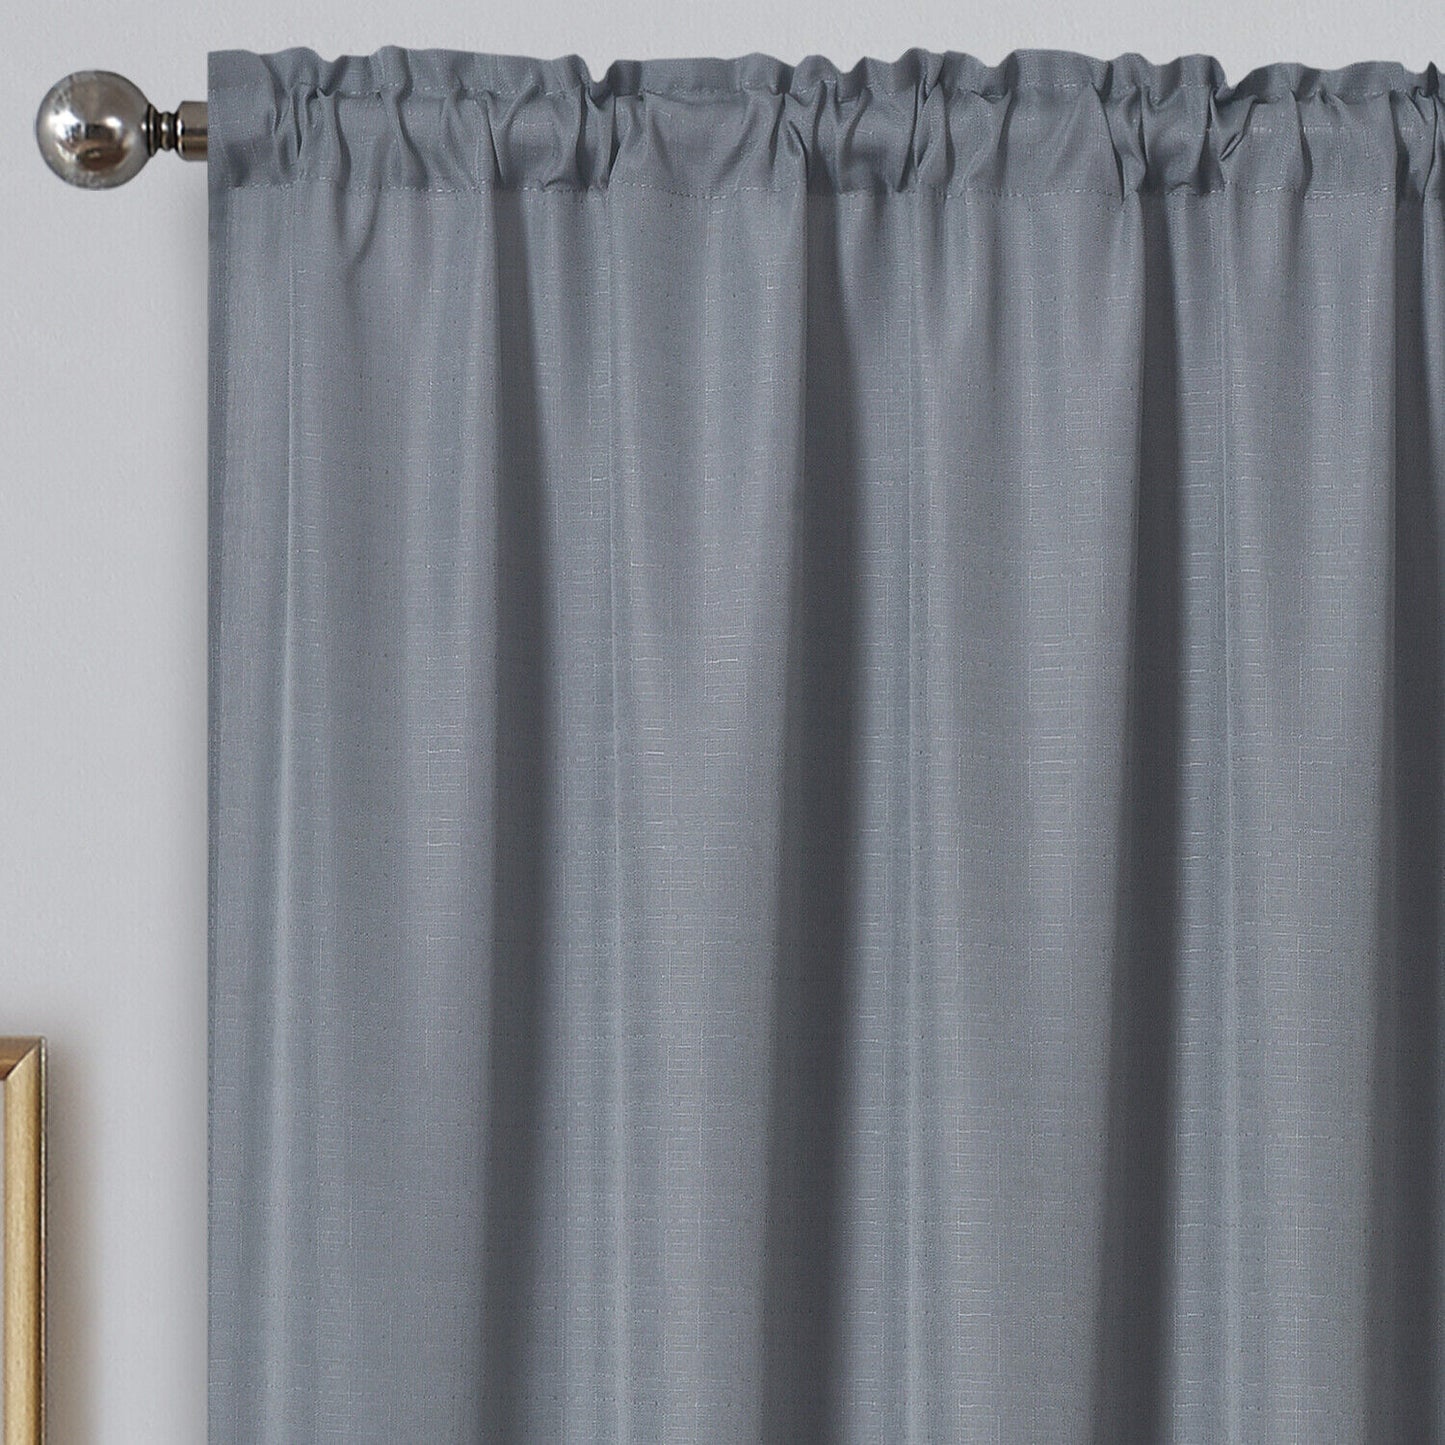 Linen Look Voile 59" x 54" Grey Window Curtain Drapes Textured Plain Slot Top